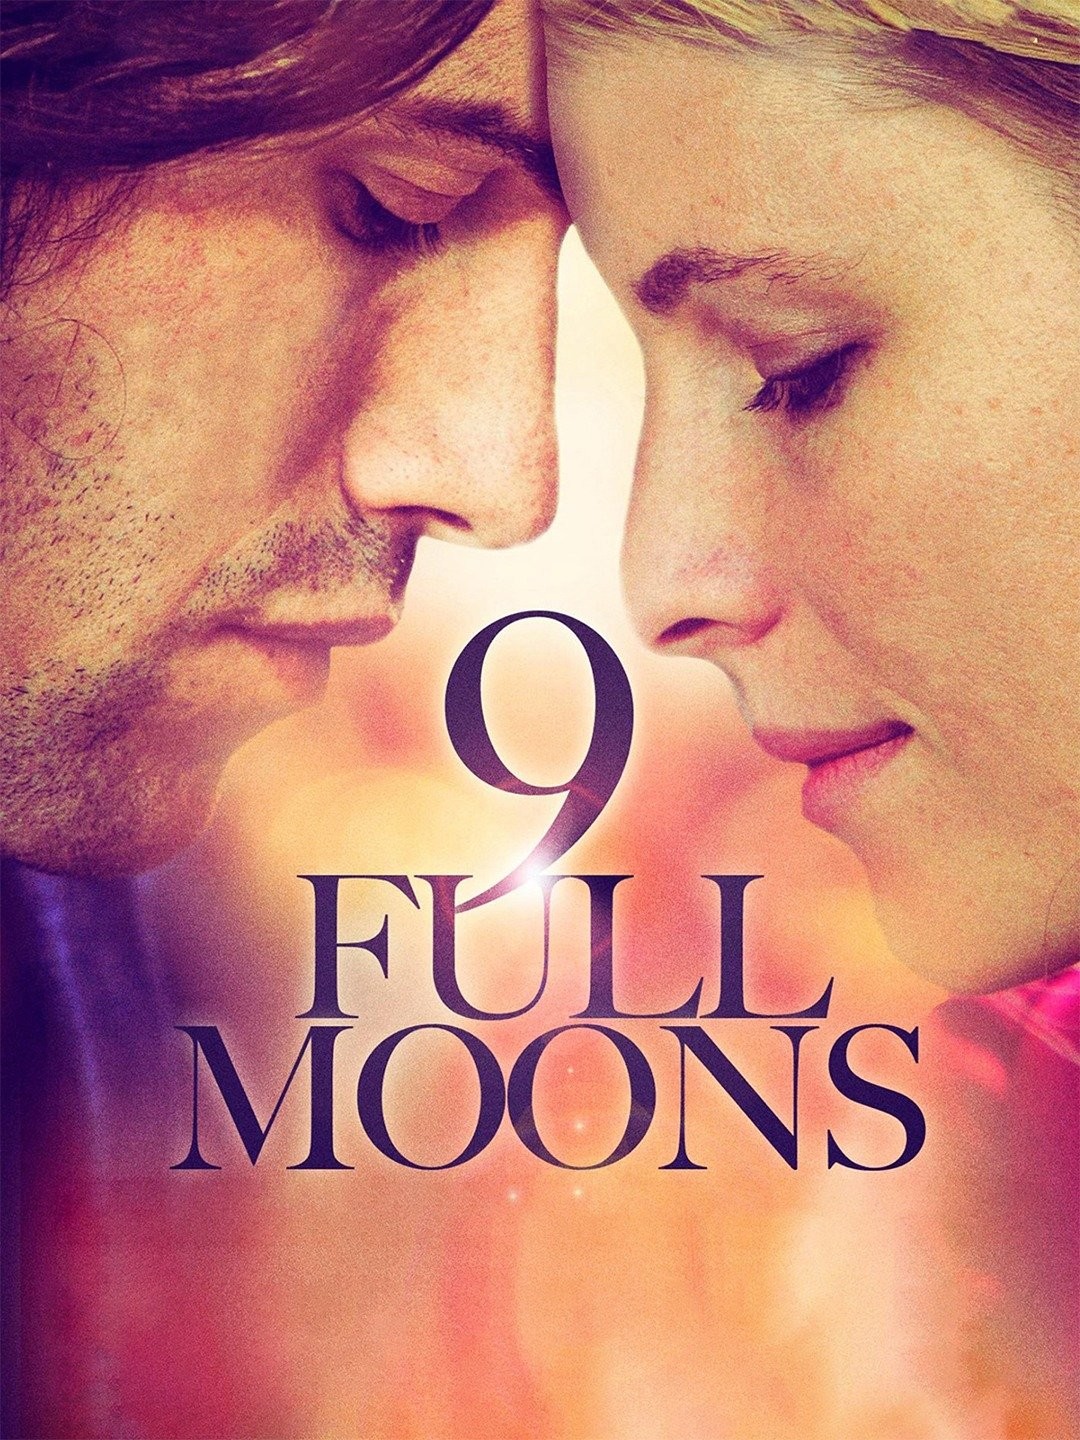 9 full moons movie